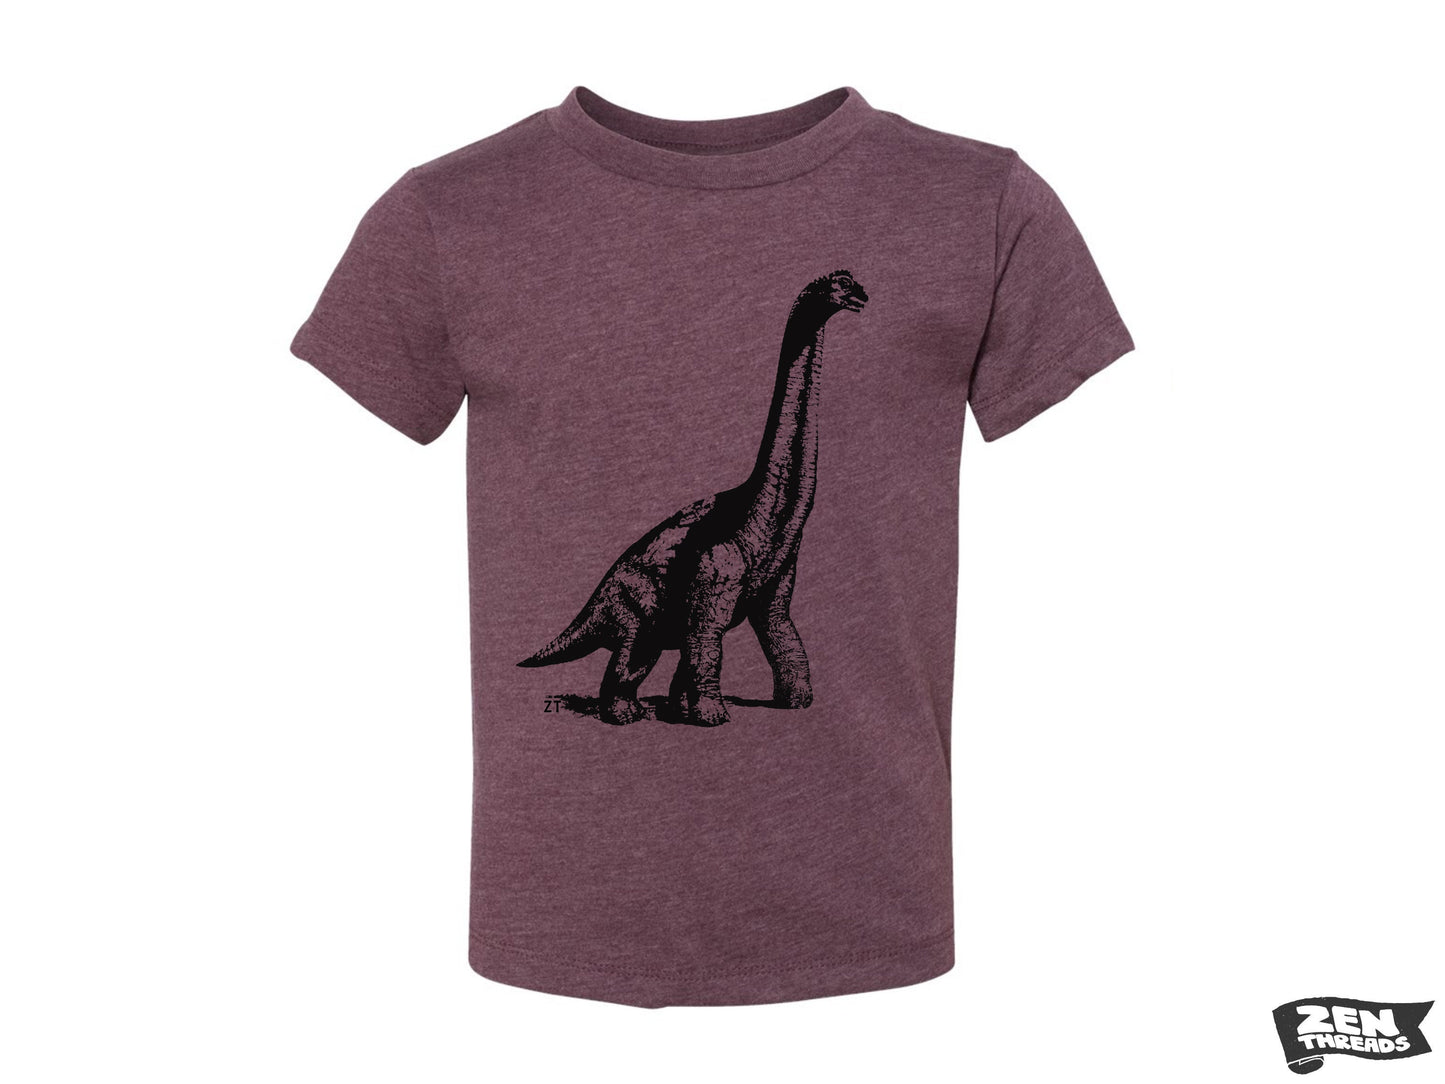 Kids DINOSAUR Premium vintage soft Tee T-Shirt Fine Jersey T-Shirt (+Colors) youth toddler zen threads brontosaurus jurassic archeology